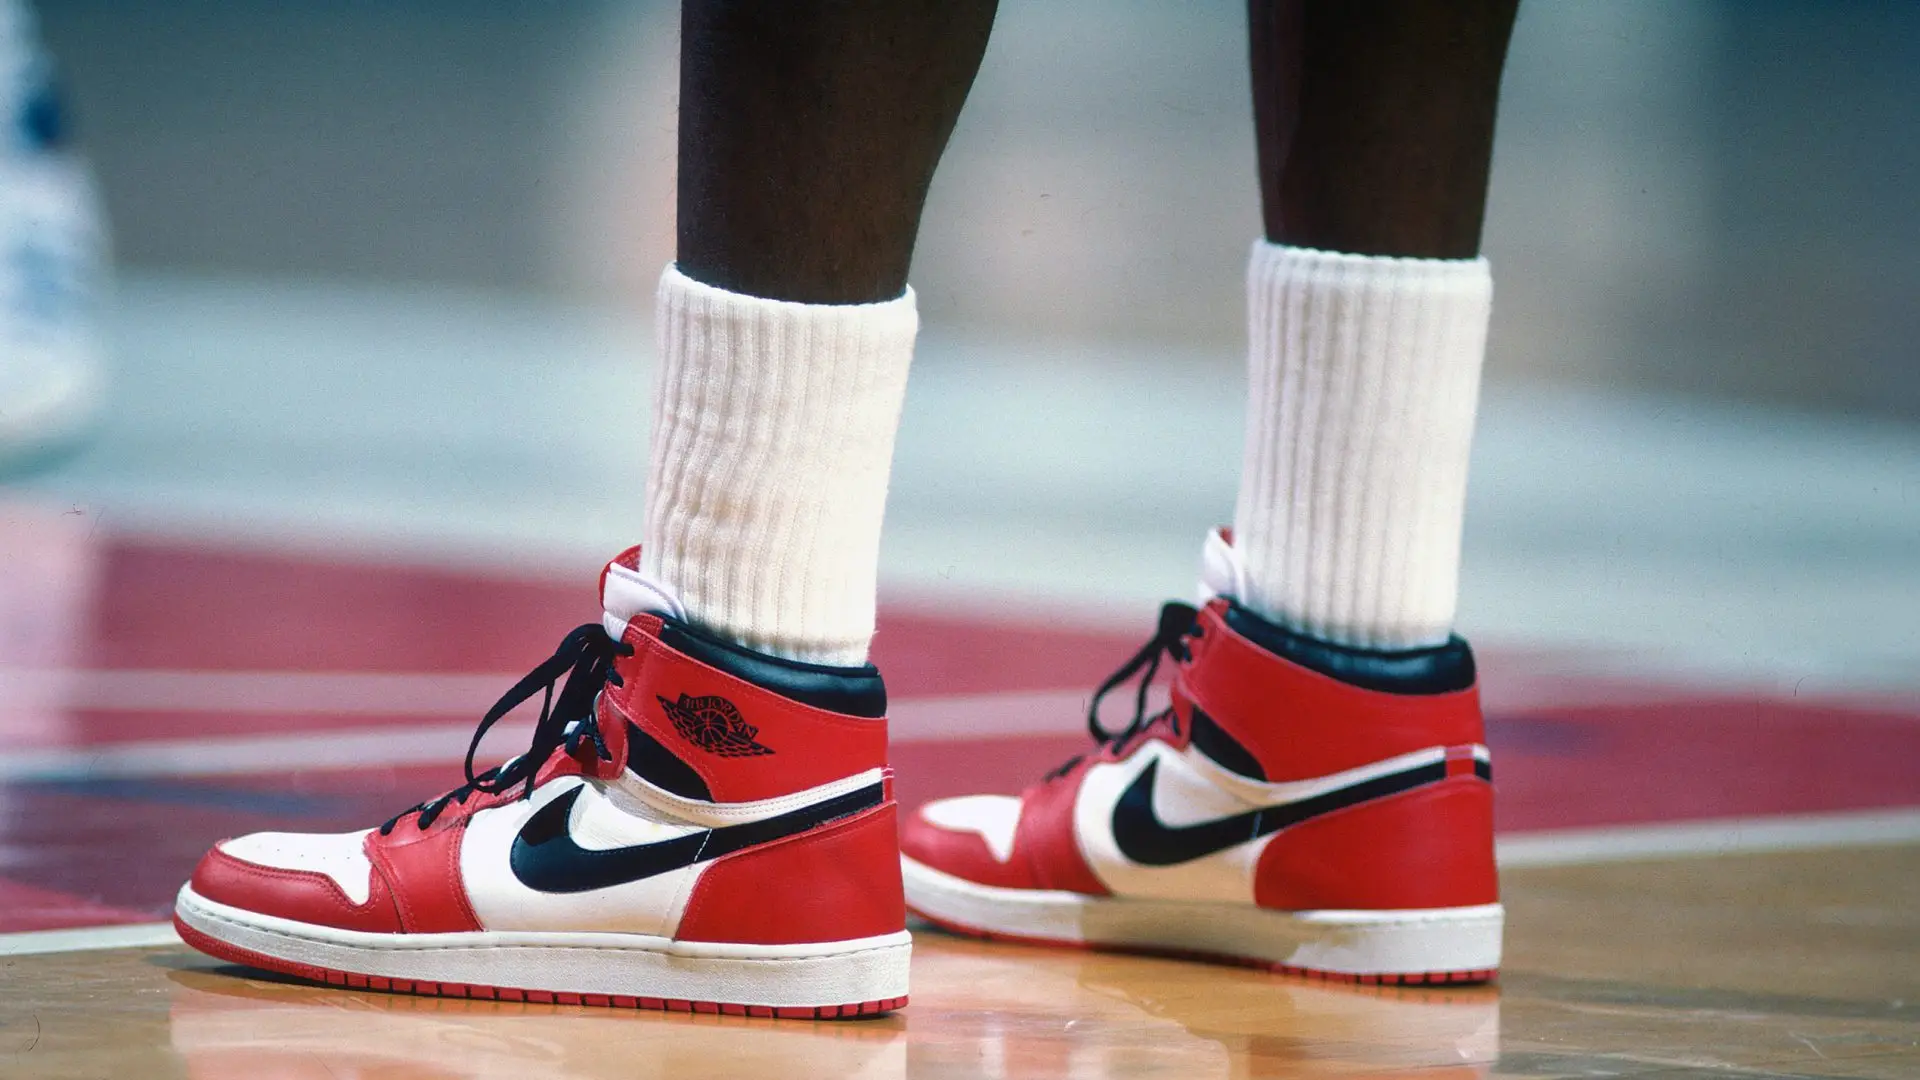 Virgil Abloh Signed Nike Air Jordan 1 Retro High Off-White UNC, Size 11.5, fifty, 2022